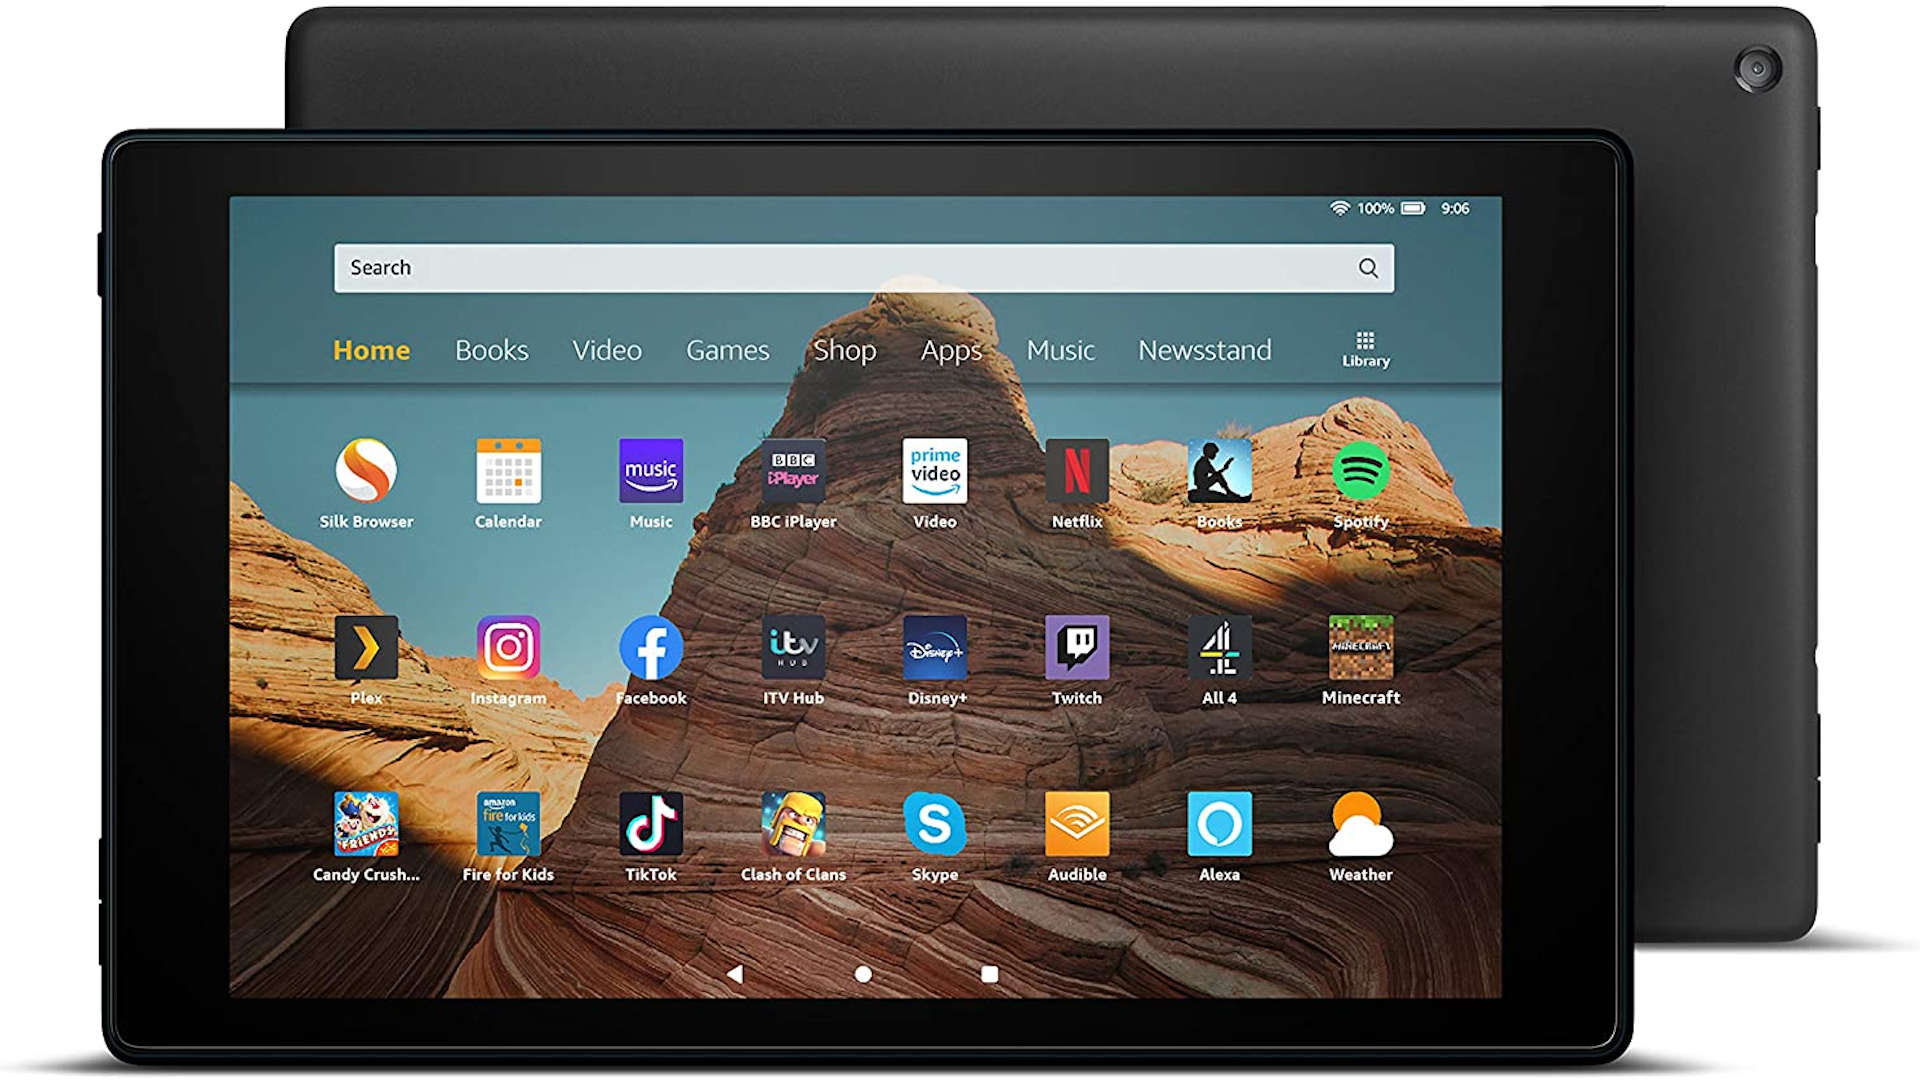 Black Friday tablets deals on Amazon Fire, Samsung Galaxy, Microsoft